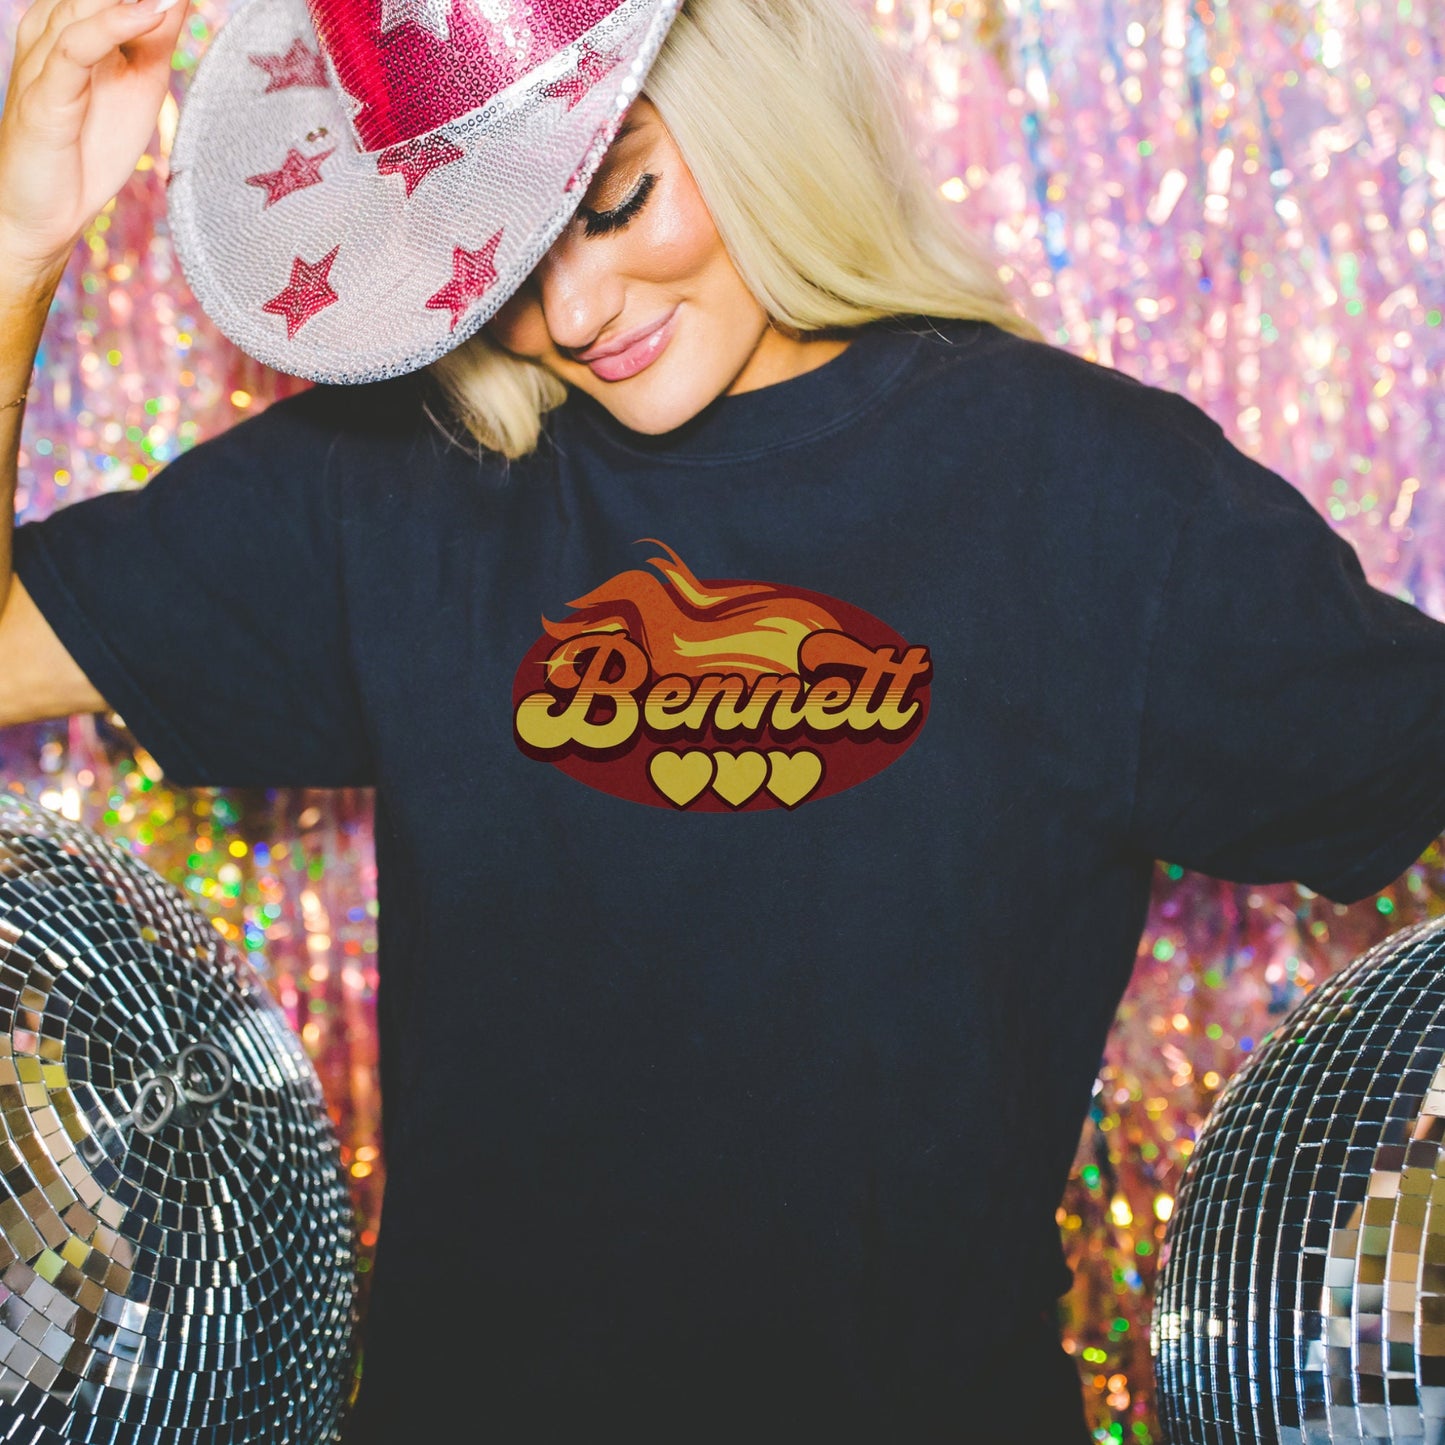 Bonnie Bennett Shirt, TVD shirt, Bonnie Bennett,TVD merch, Tvd gift, Tvd fan, Comfort Colors, Mystic Falls